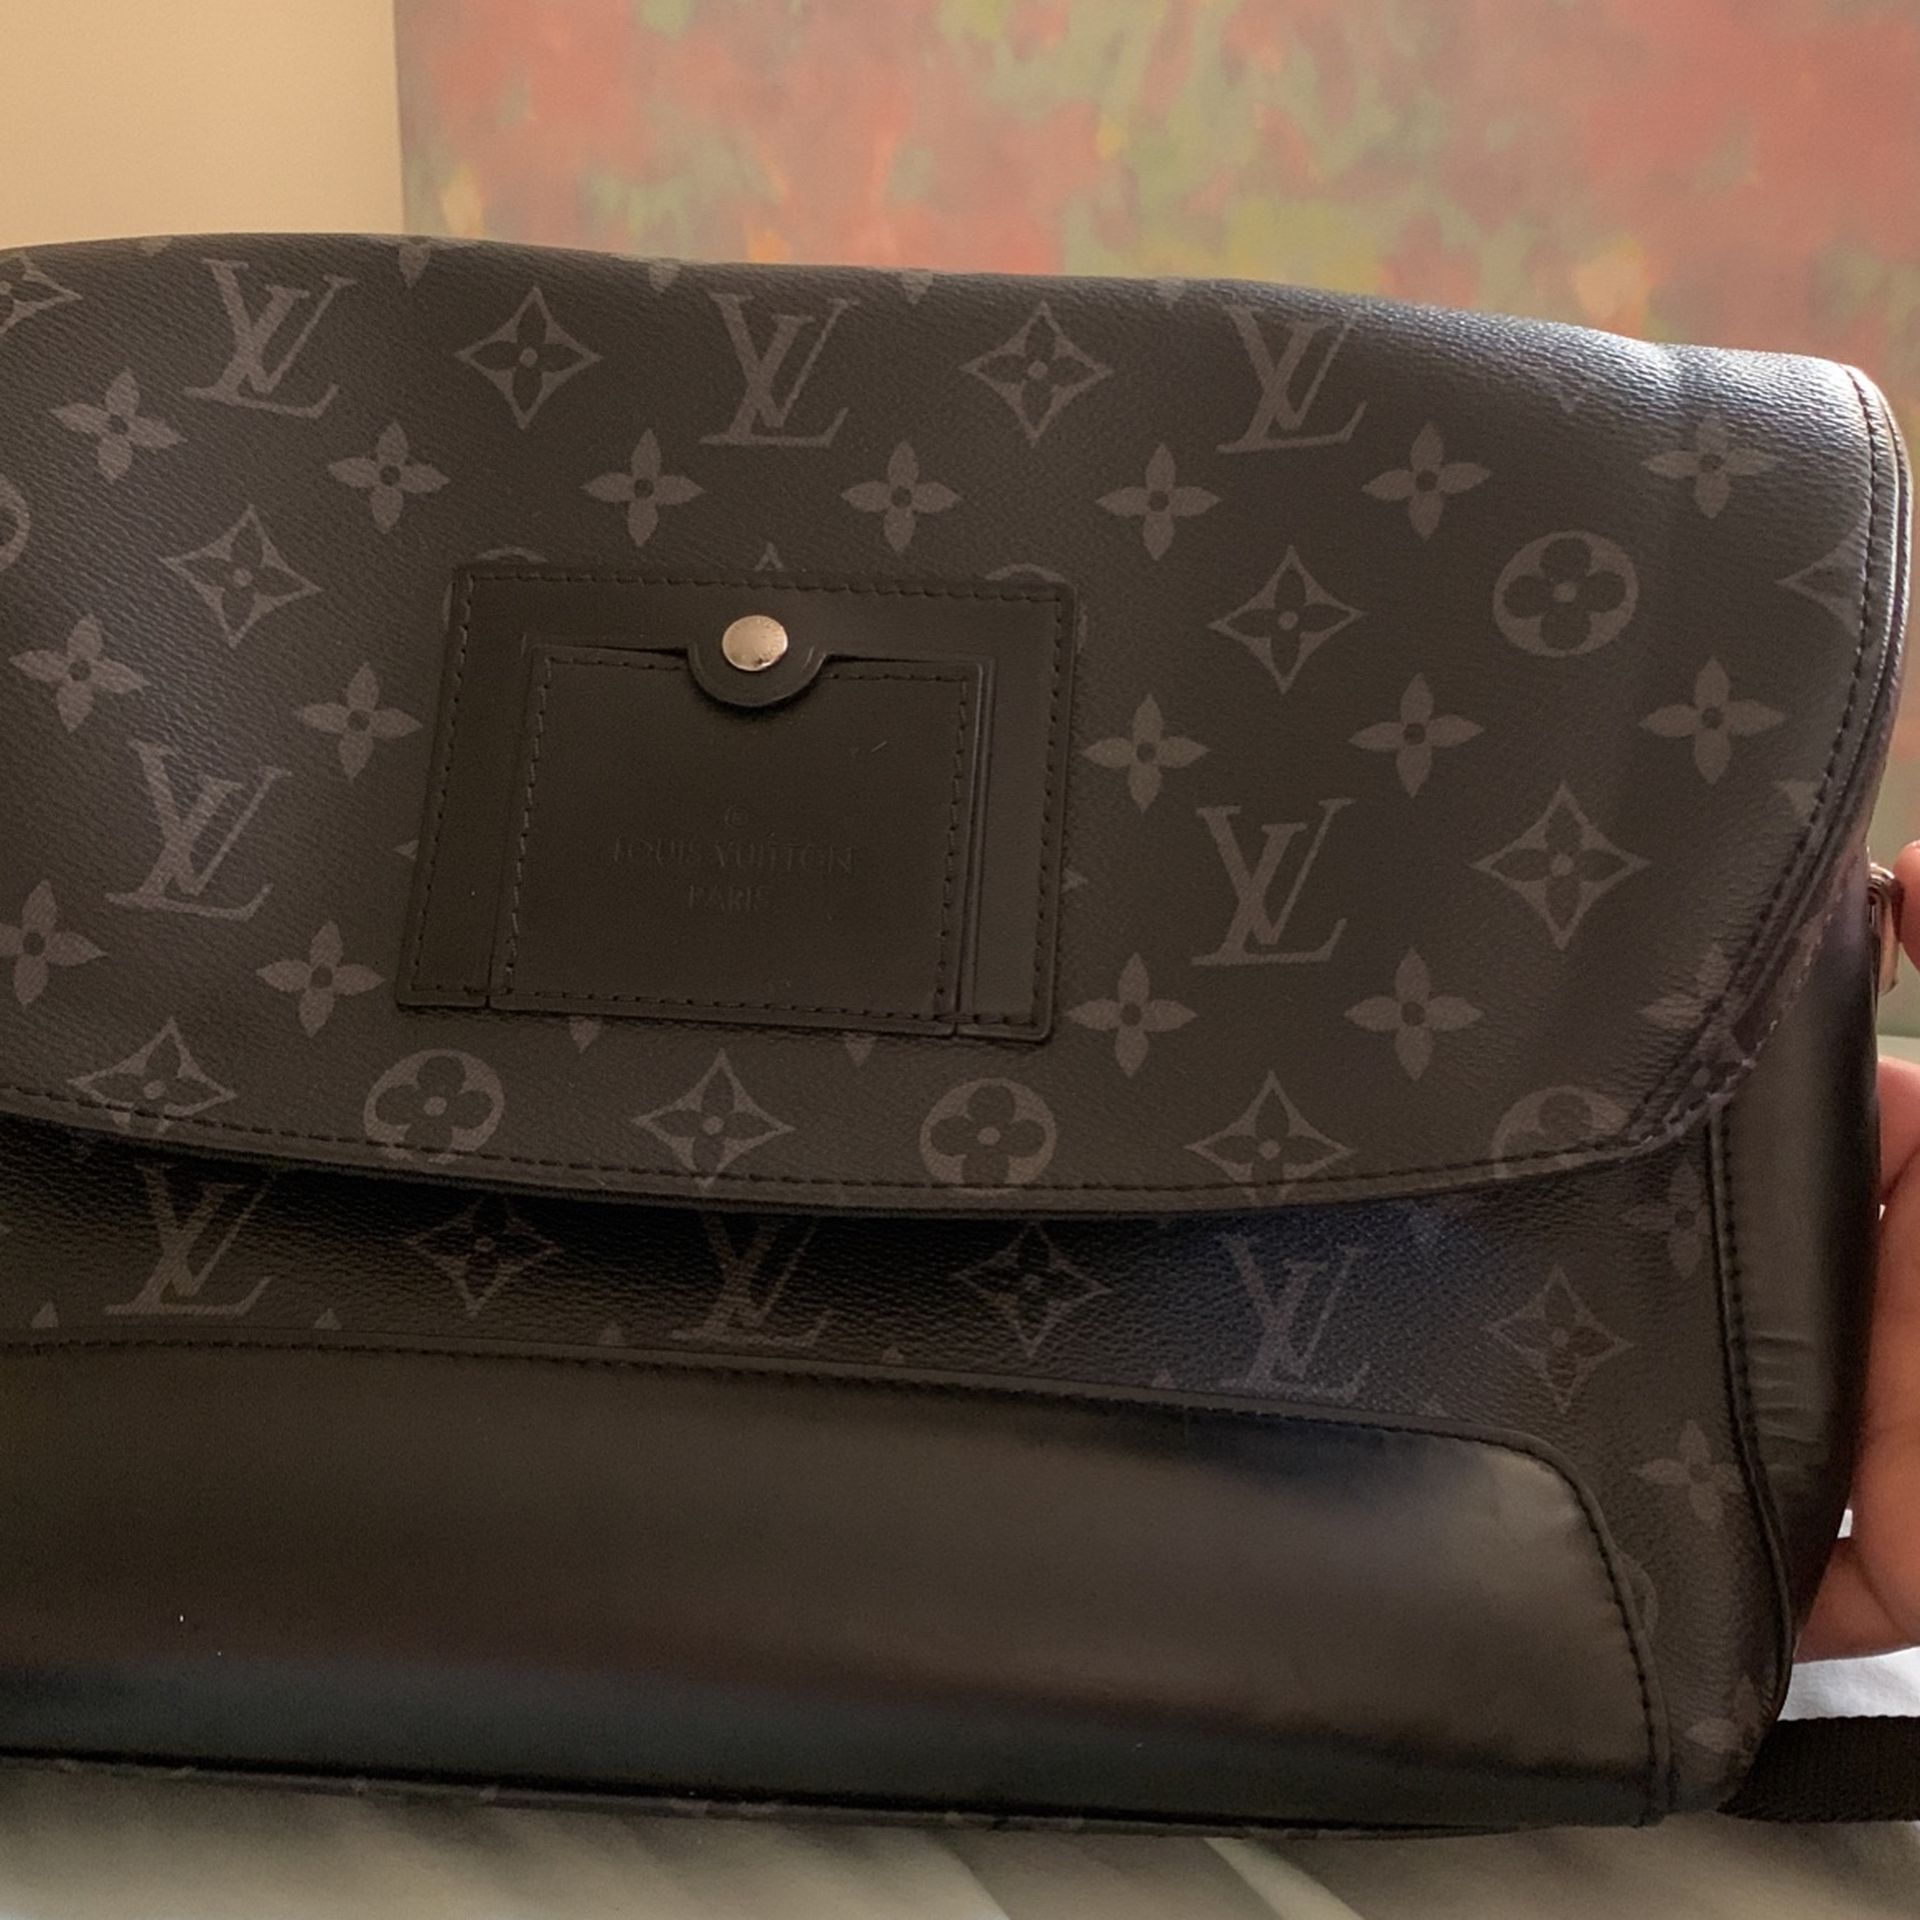 New Louis Vuitton Men's Messenger Bag for Sale in Downey, CA